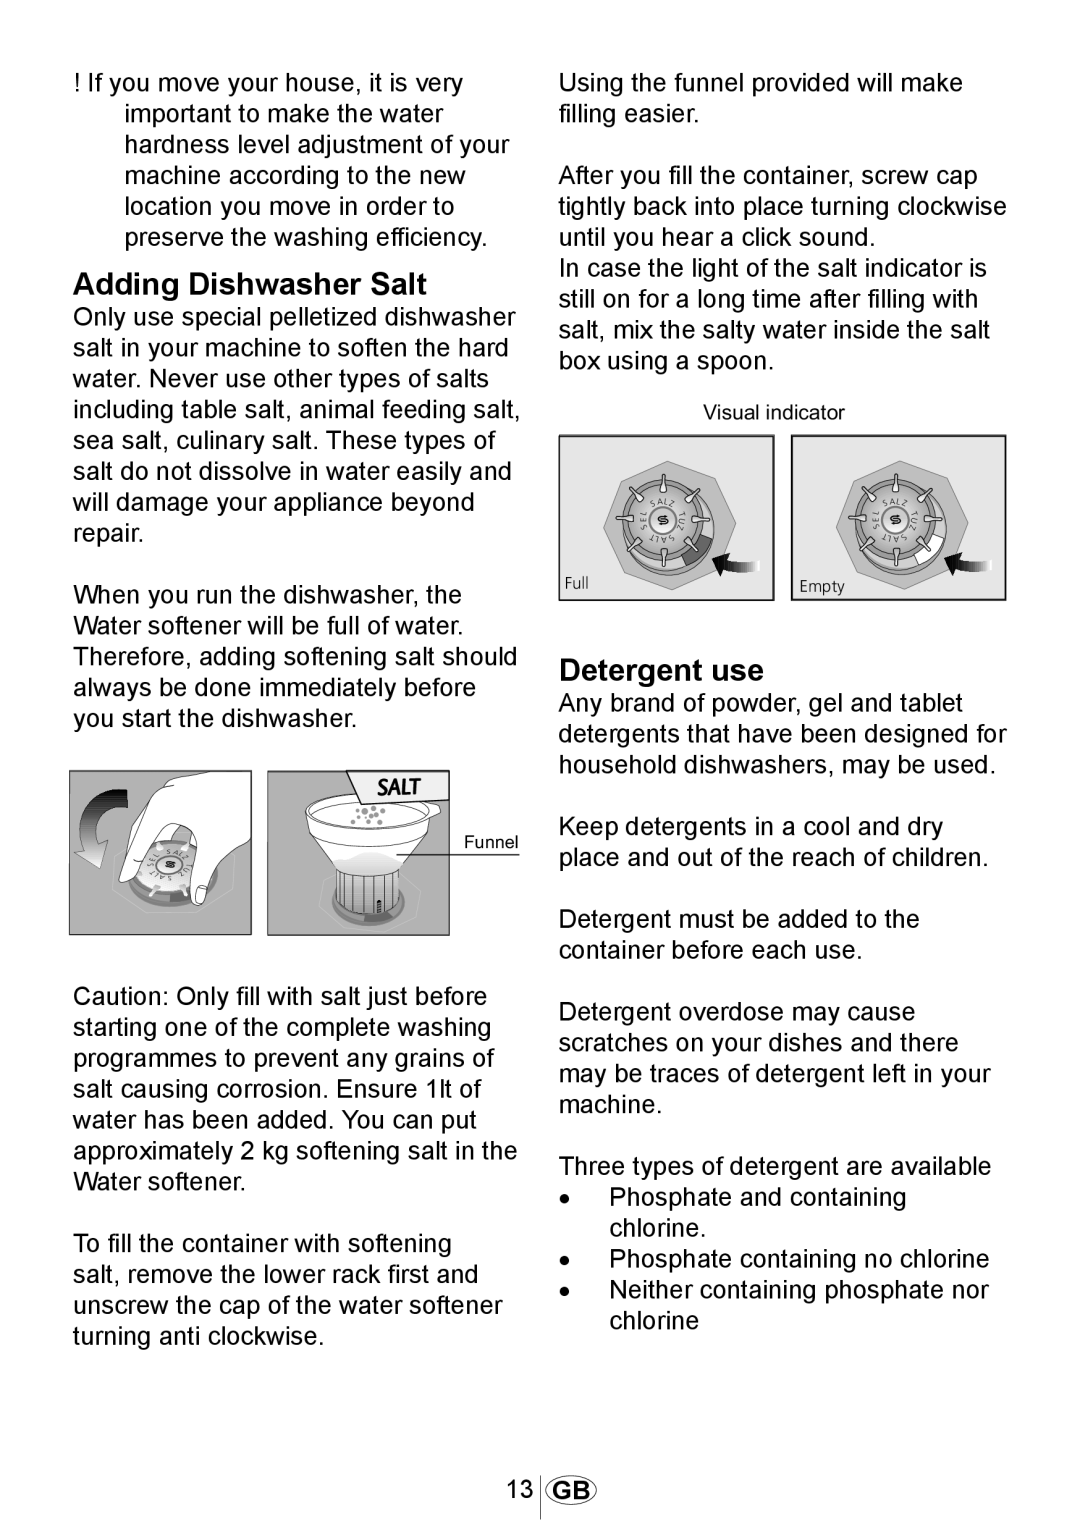 Beko DW602 manual Adding Dishwasher Salt, Detergent use 